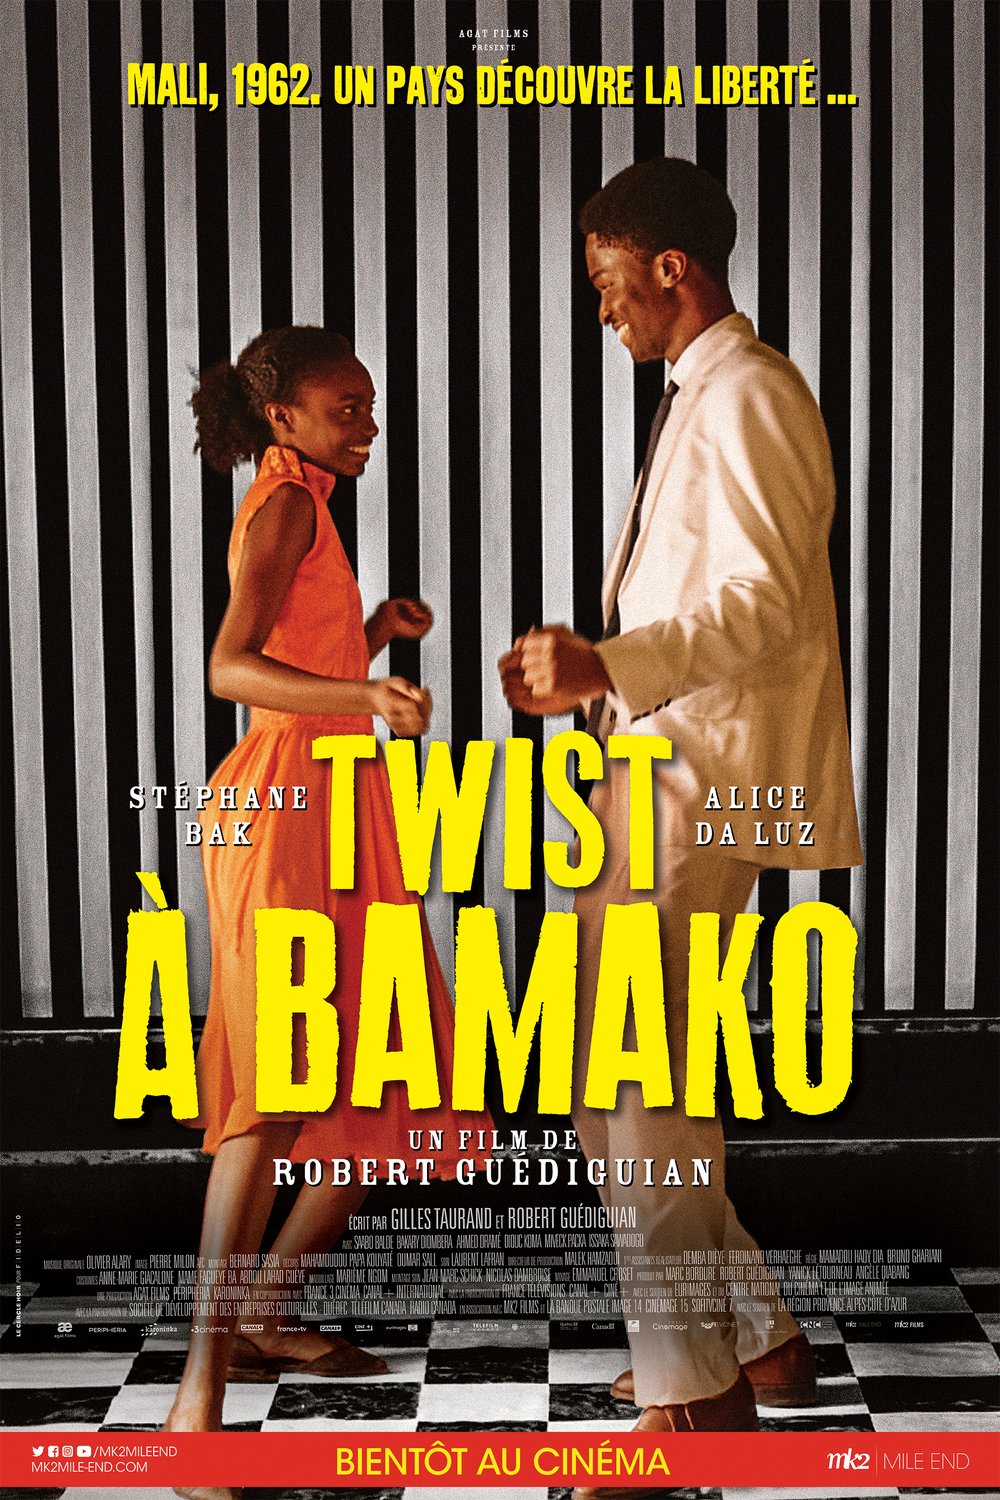 Poster of the movie Mali Twist